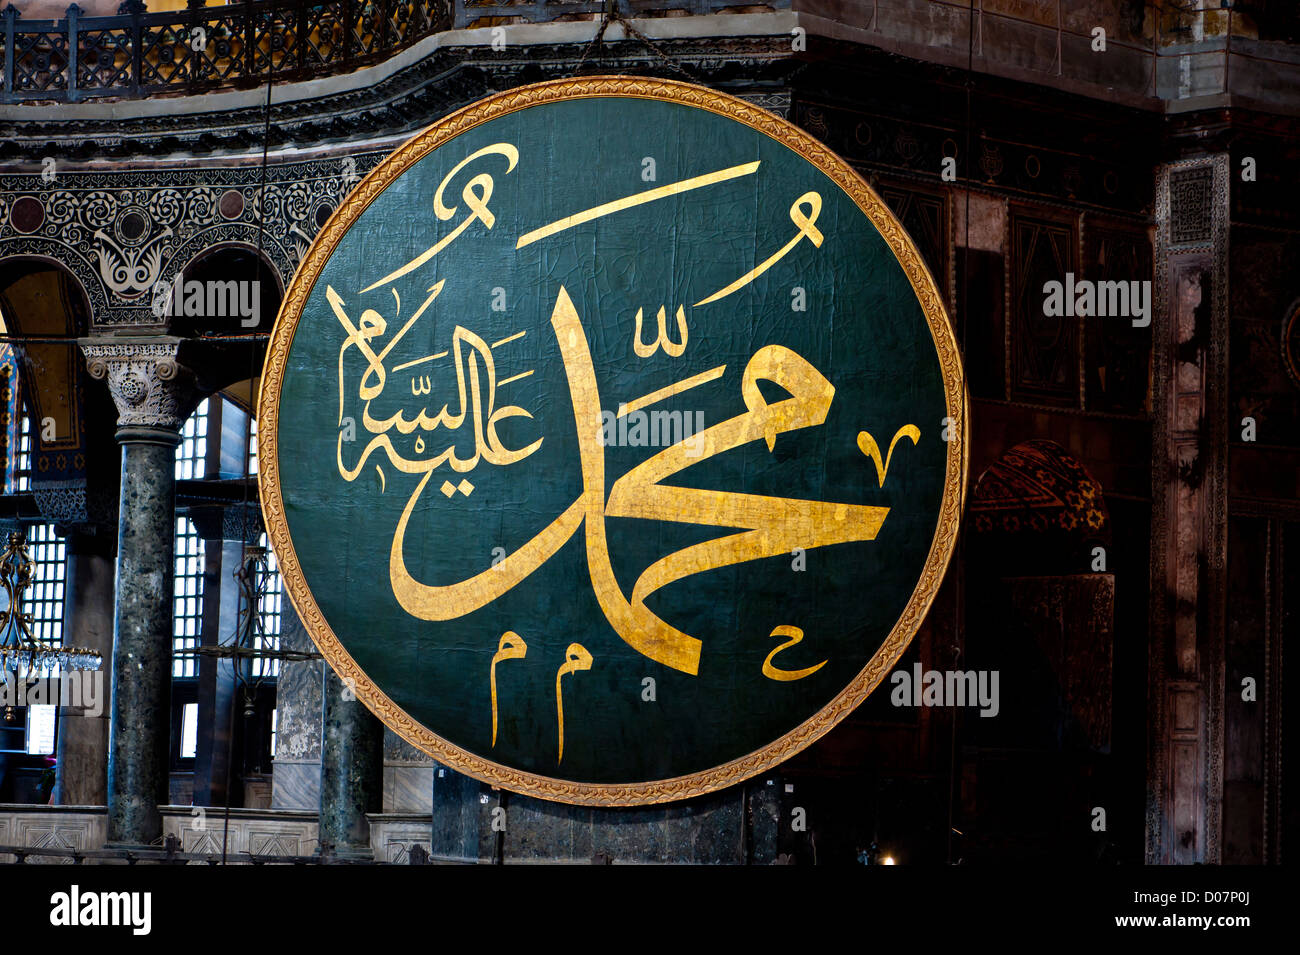 Arabic script on large shields in the Hagia Sophia, Istanbul Stock Photo